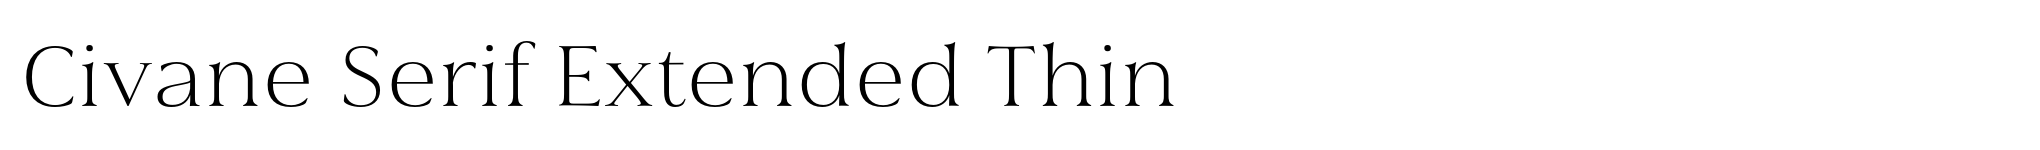 Civane Serif Extended Thin image